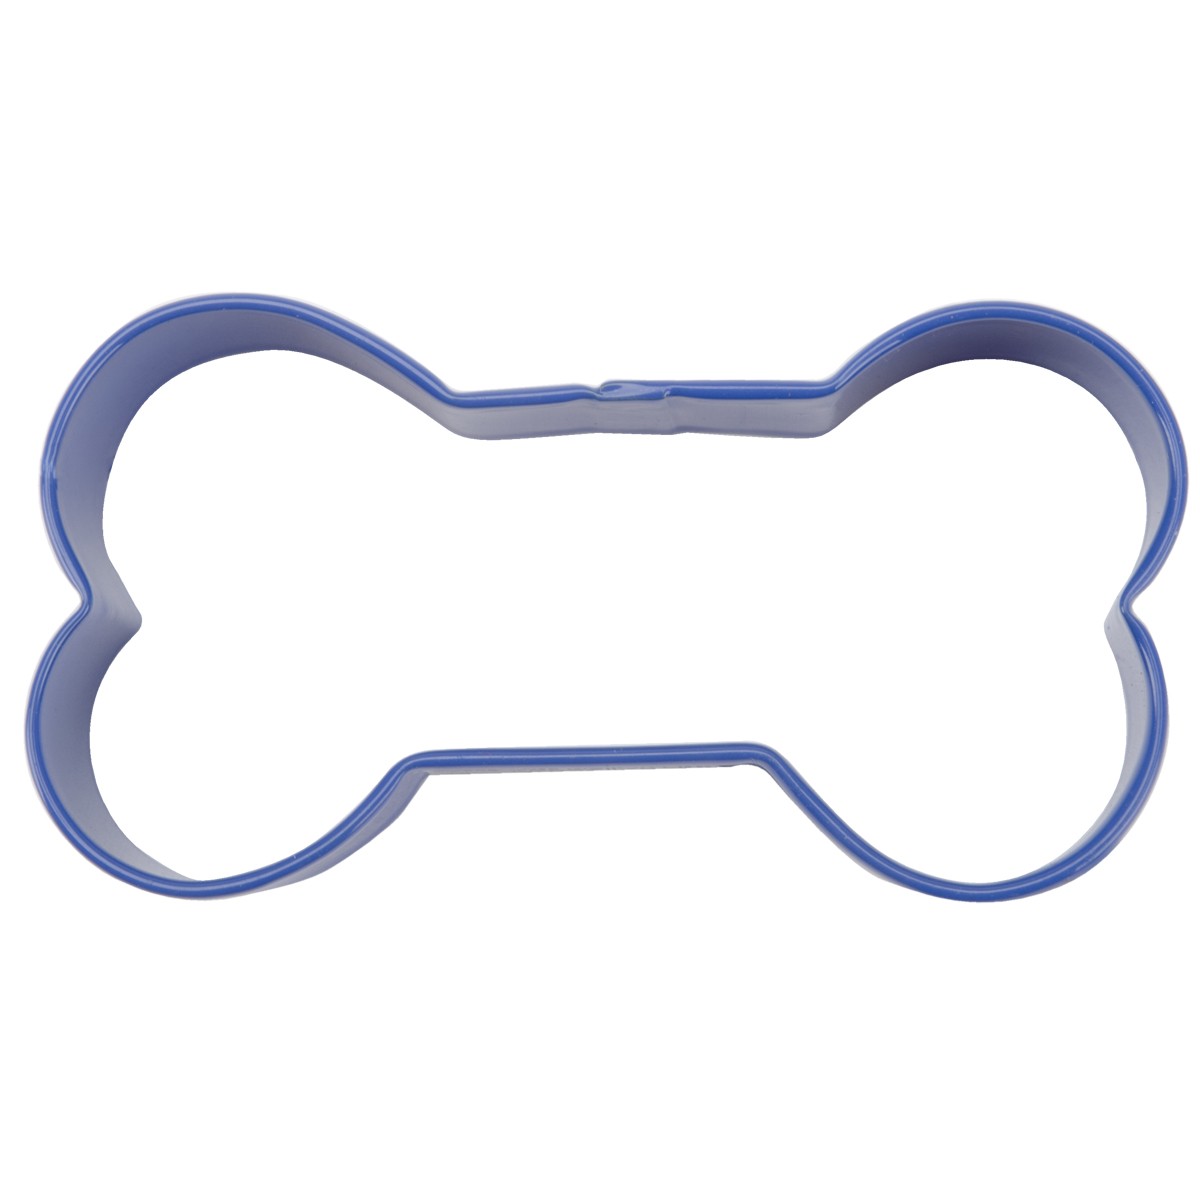 Dog bone clip art free vector - Clipart Dog Bone